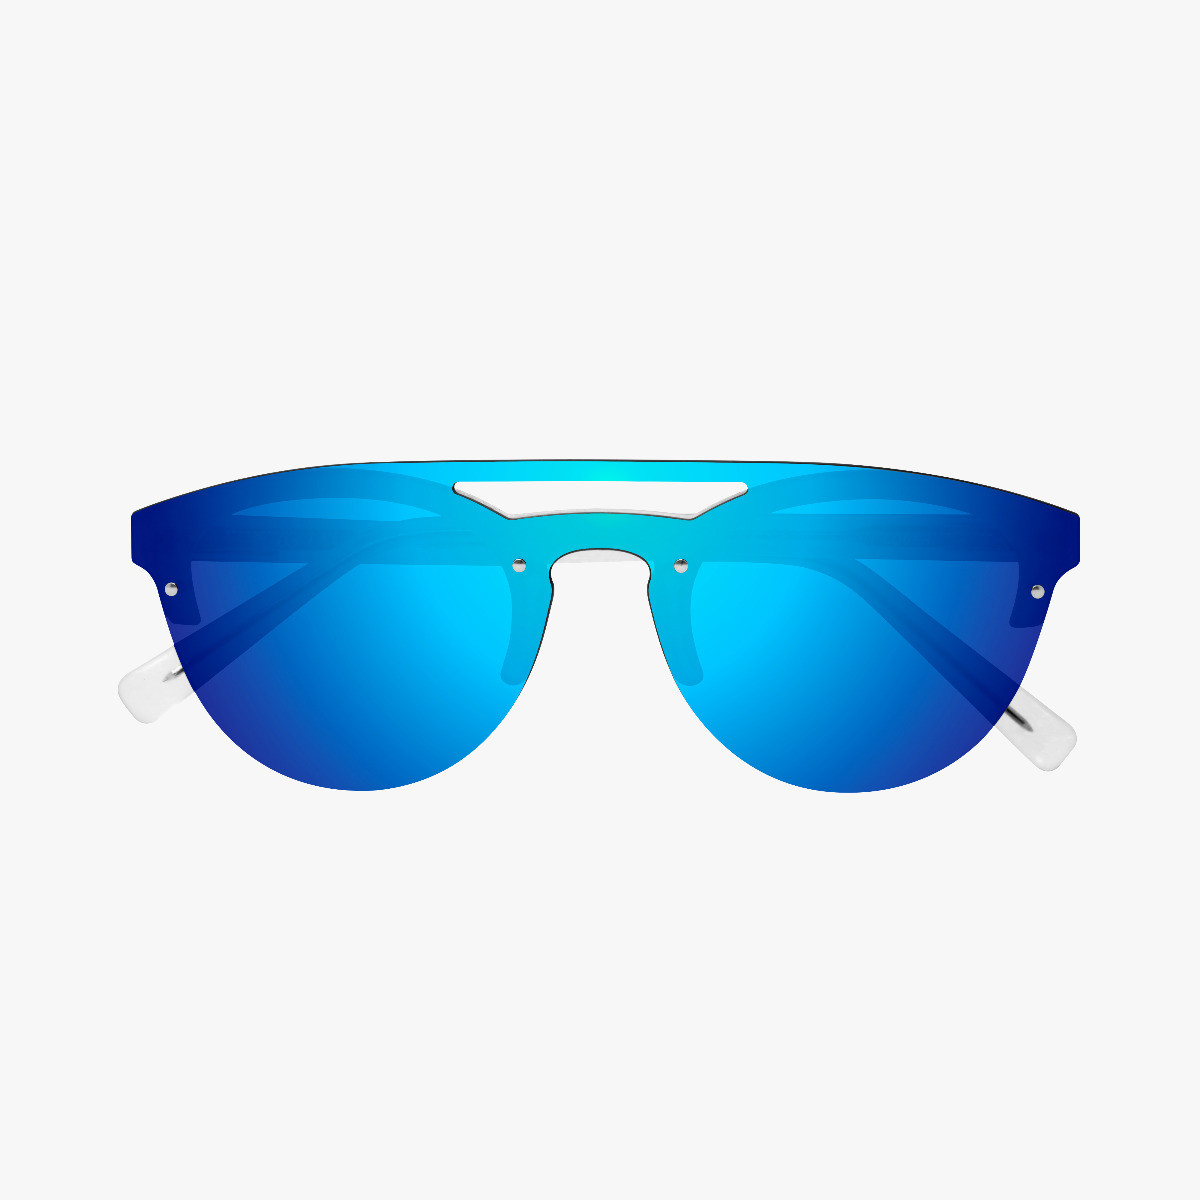 Scicon Sports | Cover Lifestyle Unisex Sunglasses - Frozen Frame, Blue Lens - EY160305